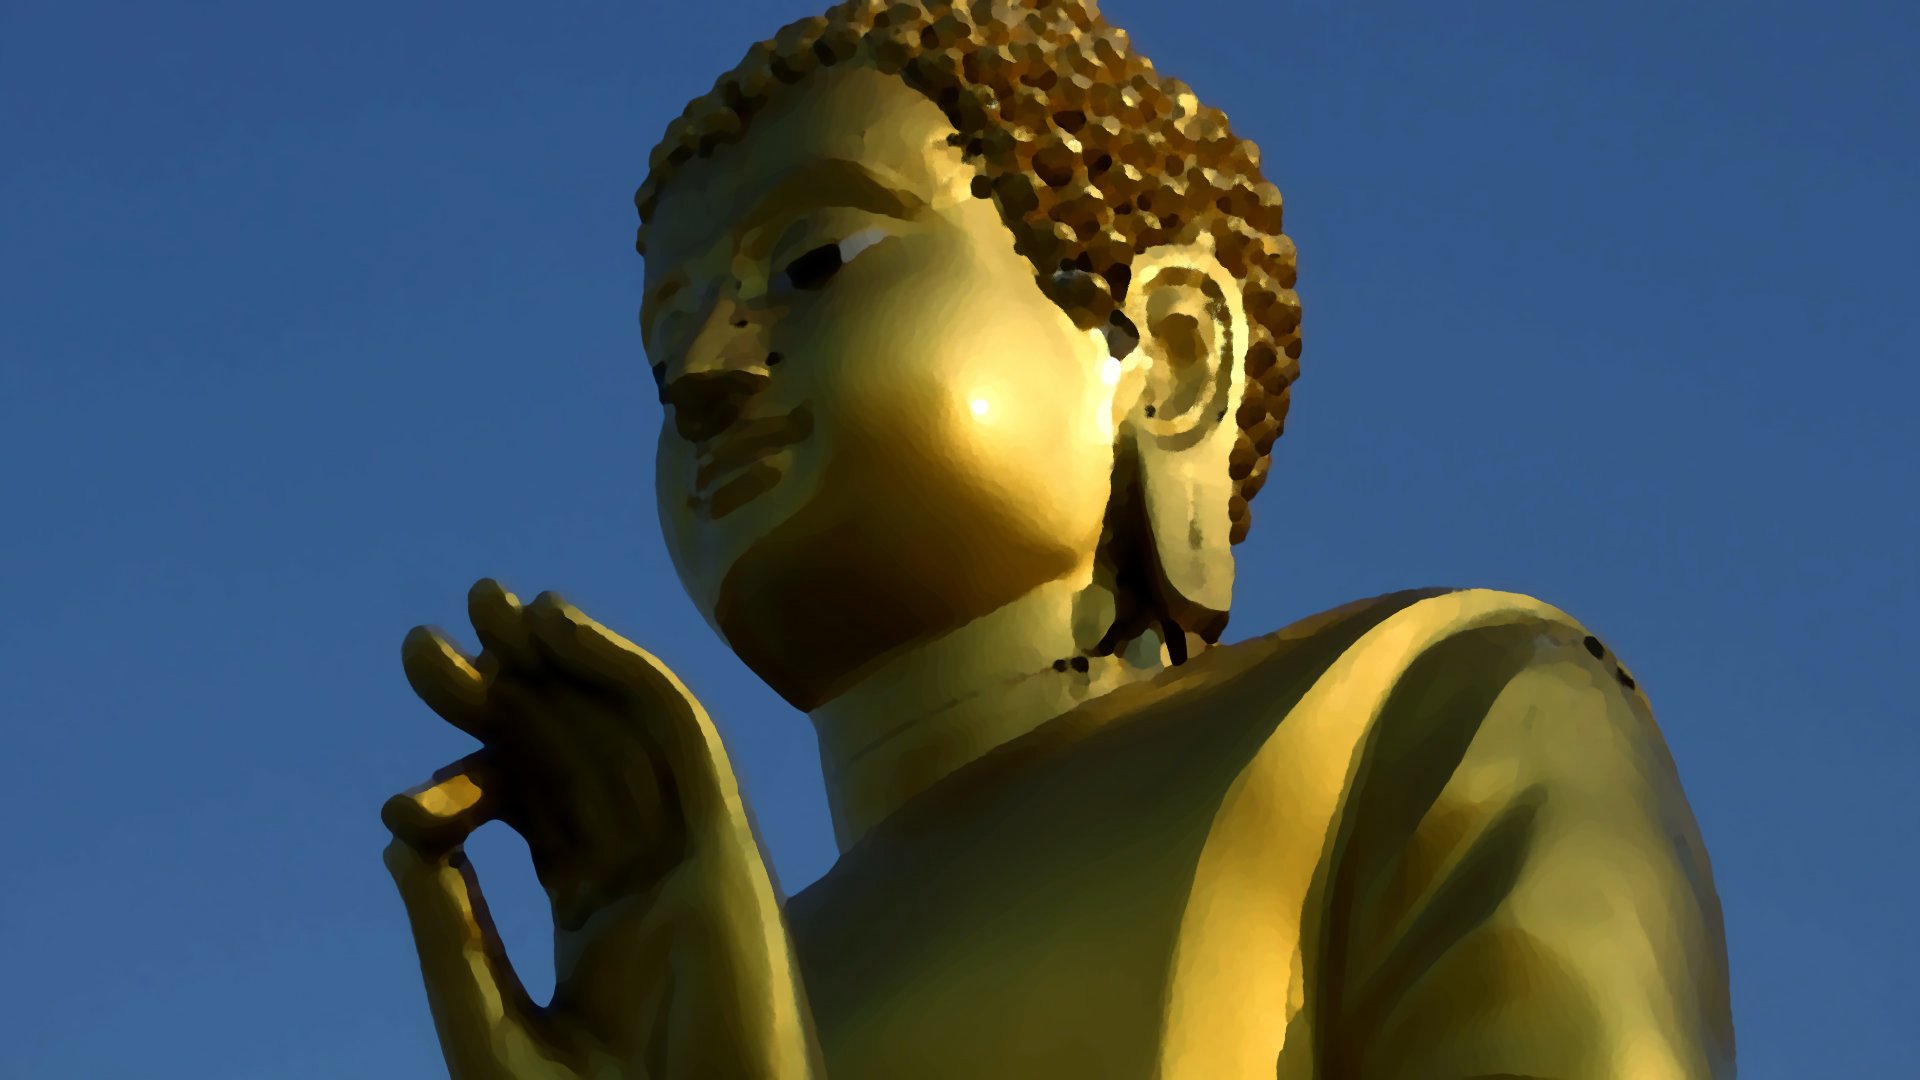 The Buddha and the sky 2